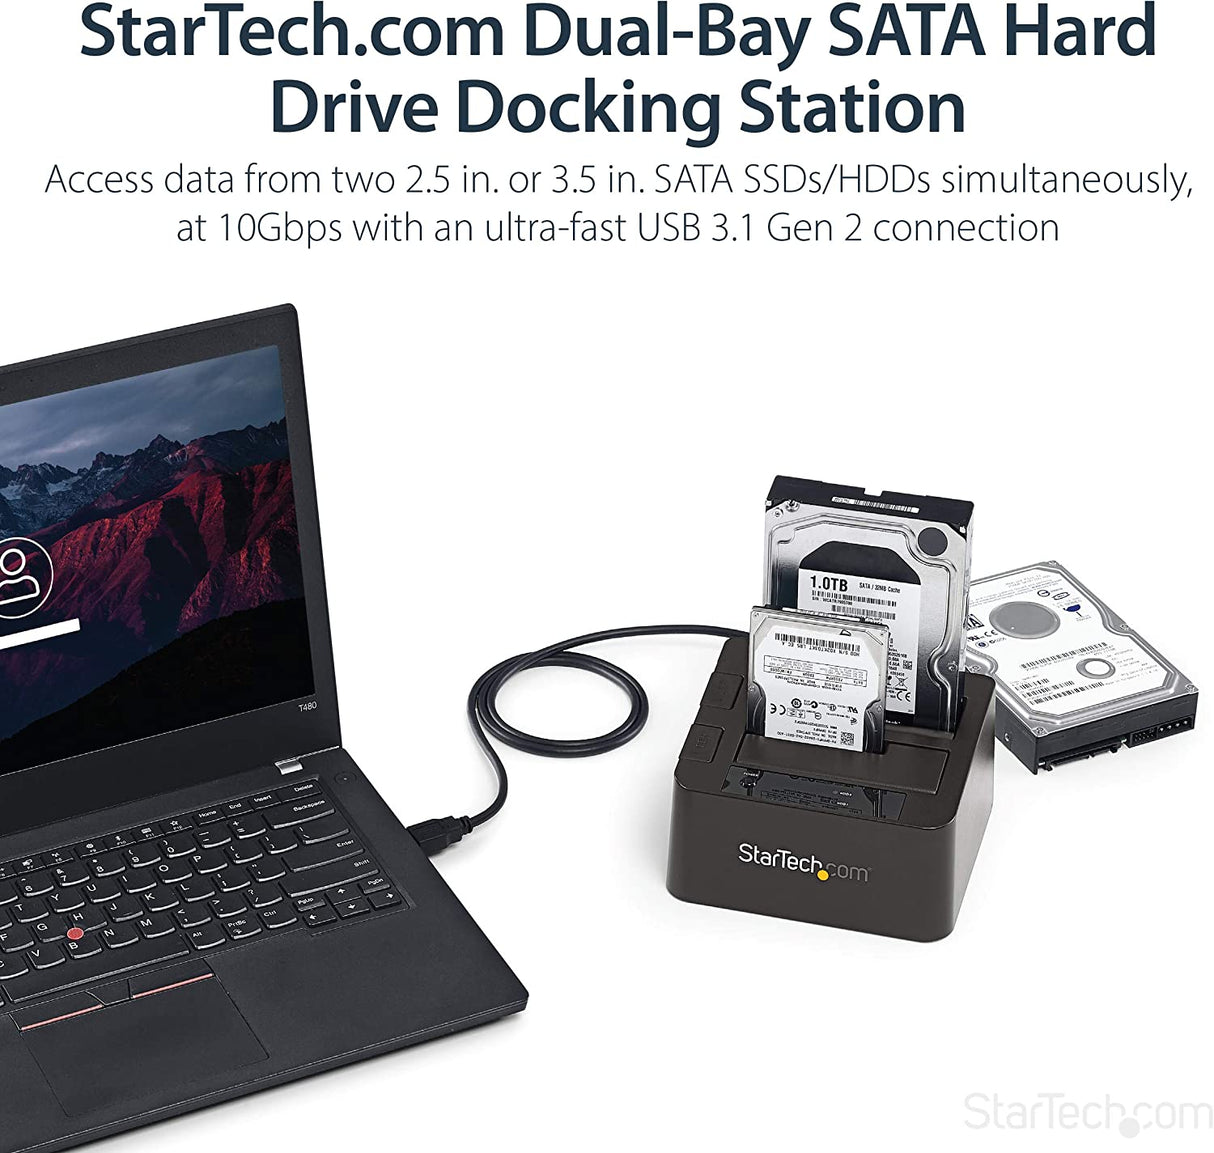 StarTech.com Dual-Bay USB 3.1 to SATA Hard Drive Docking Station, USB 3.1 (10 Gbps), External 2.5/3.5" SATA I/II/III, SSD/HDD Docking Station, Hot-Swap Hard Drive Bay, Top-Loading (SDOCK2U313)